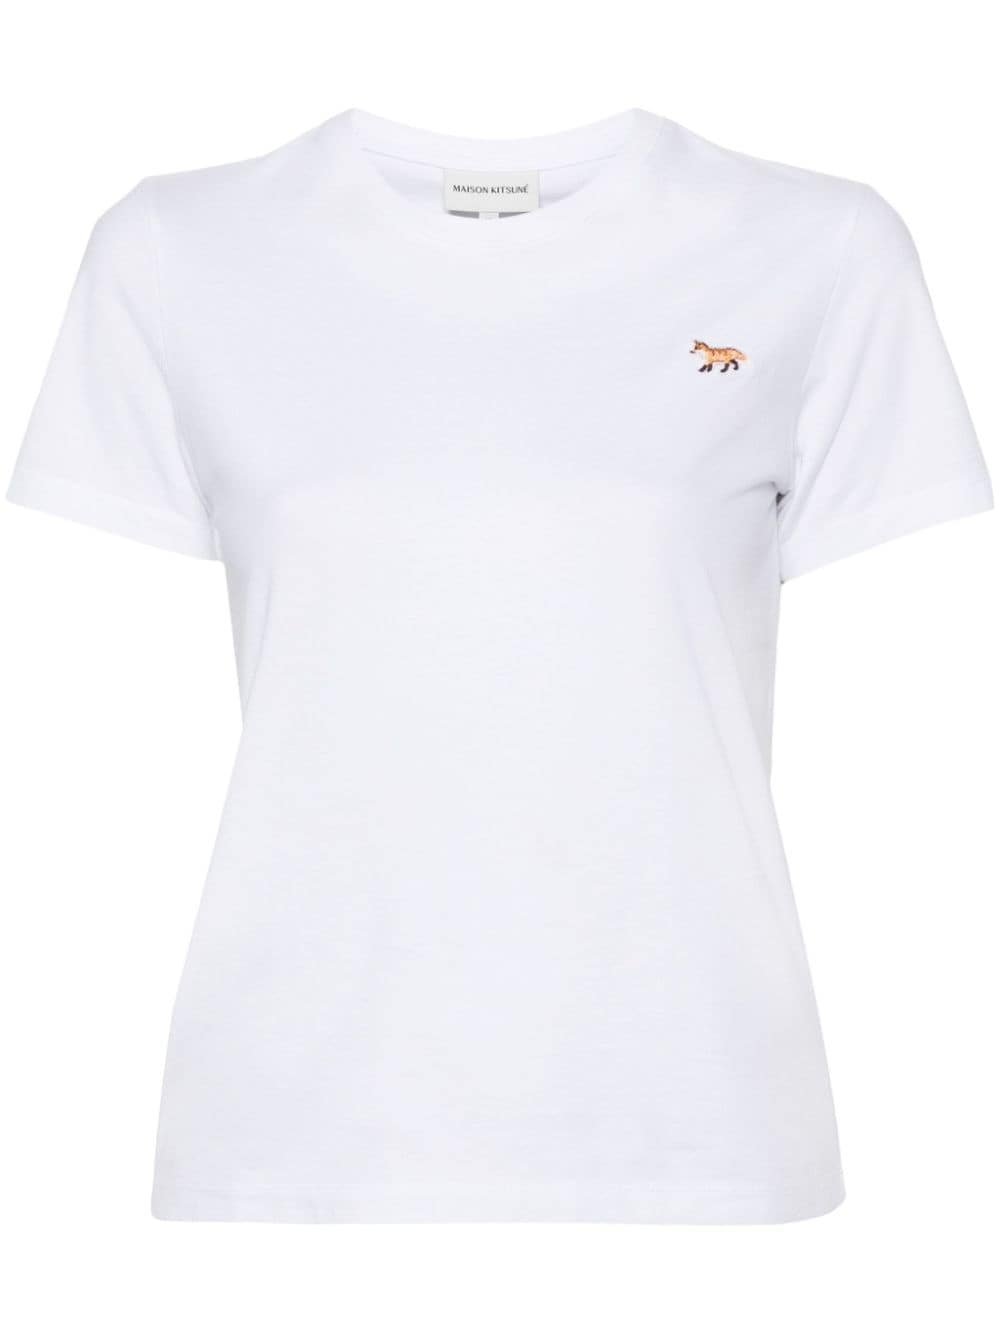 Maison Kitsuné T-Shirt mit Fuchs-Motiv - Weiß von Maison Kitsuné